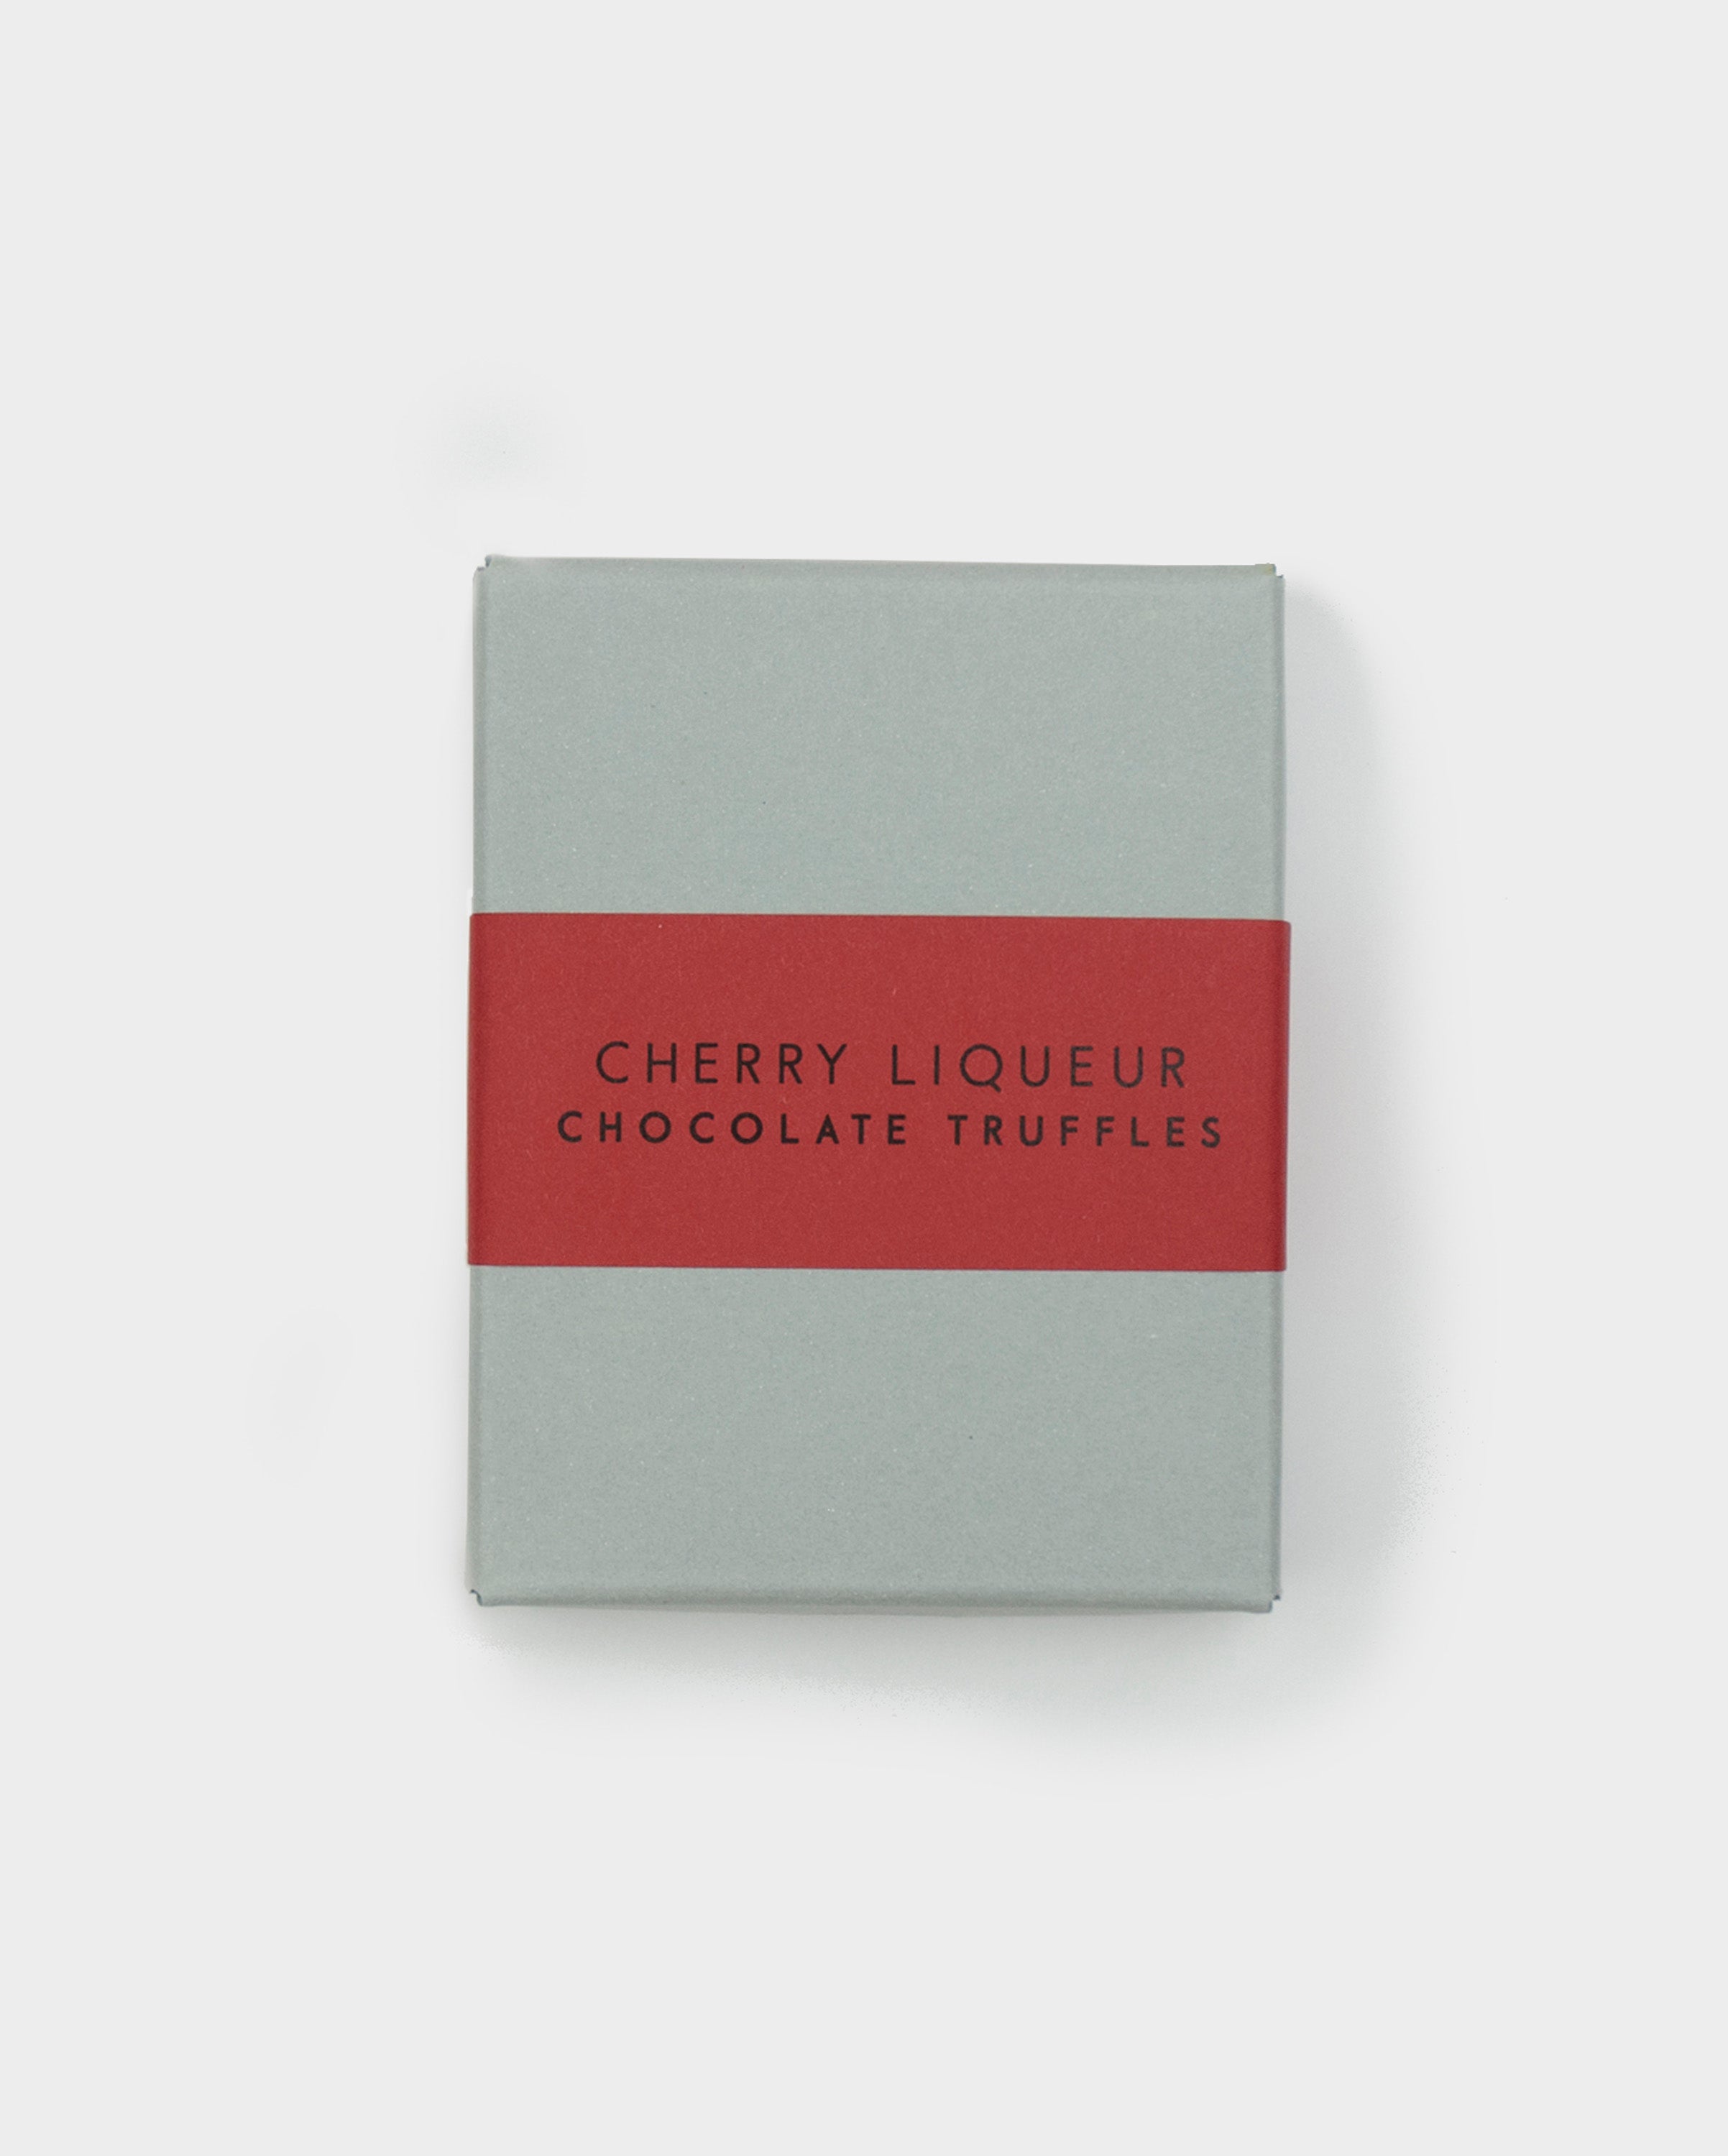 Cherry Liqueur Chocolate Truffles